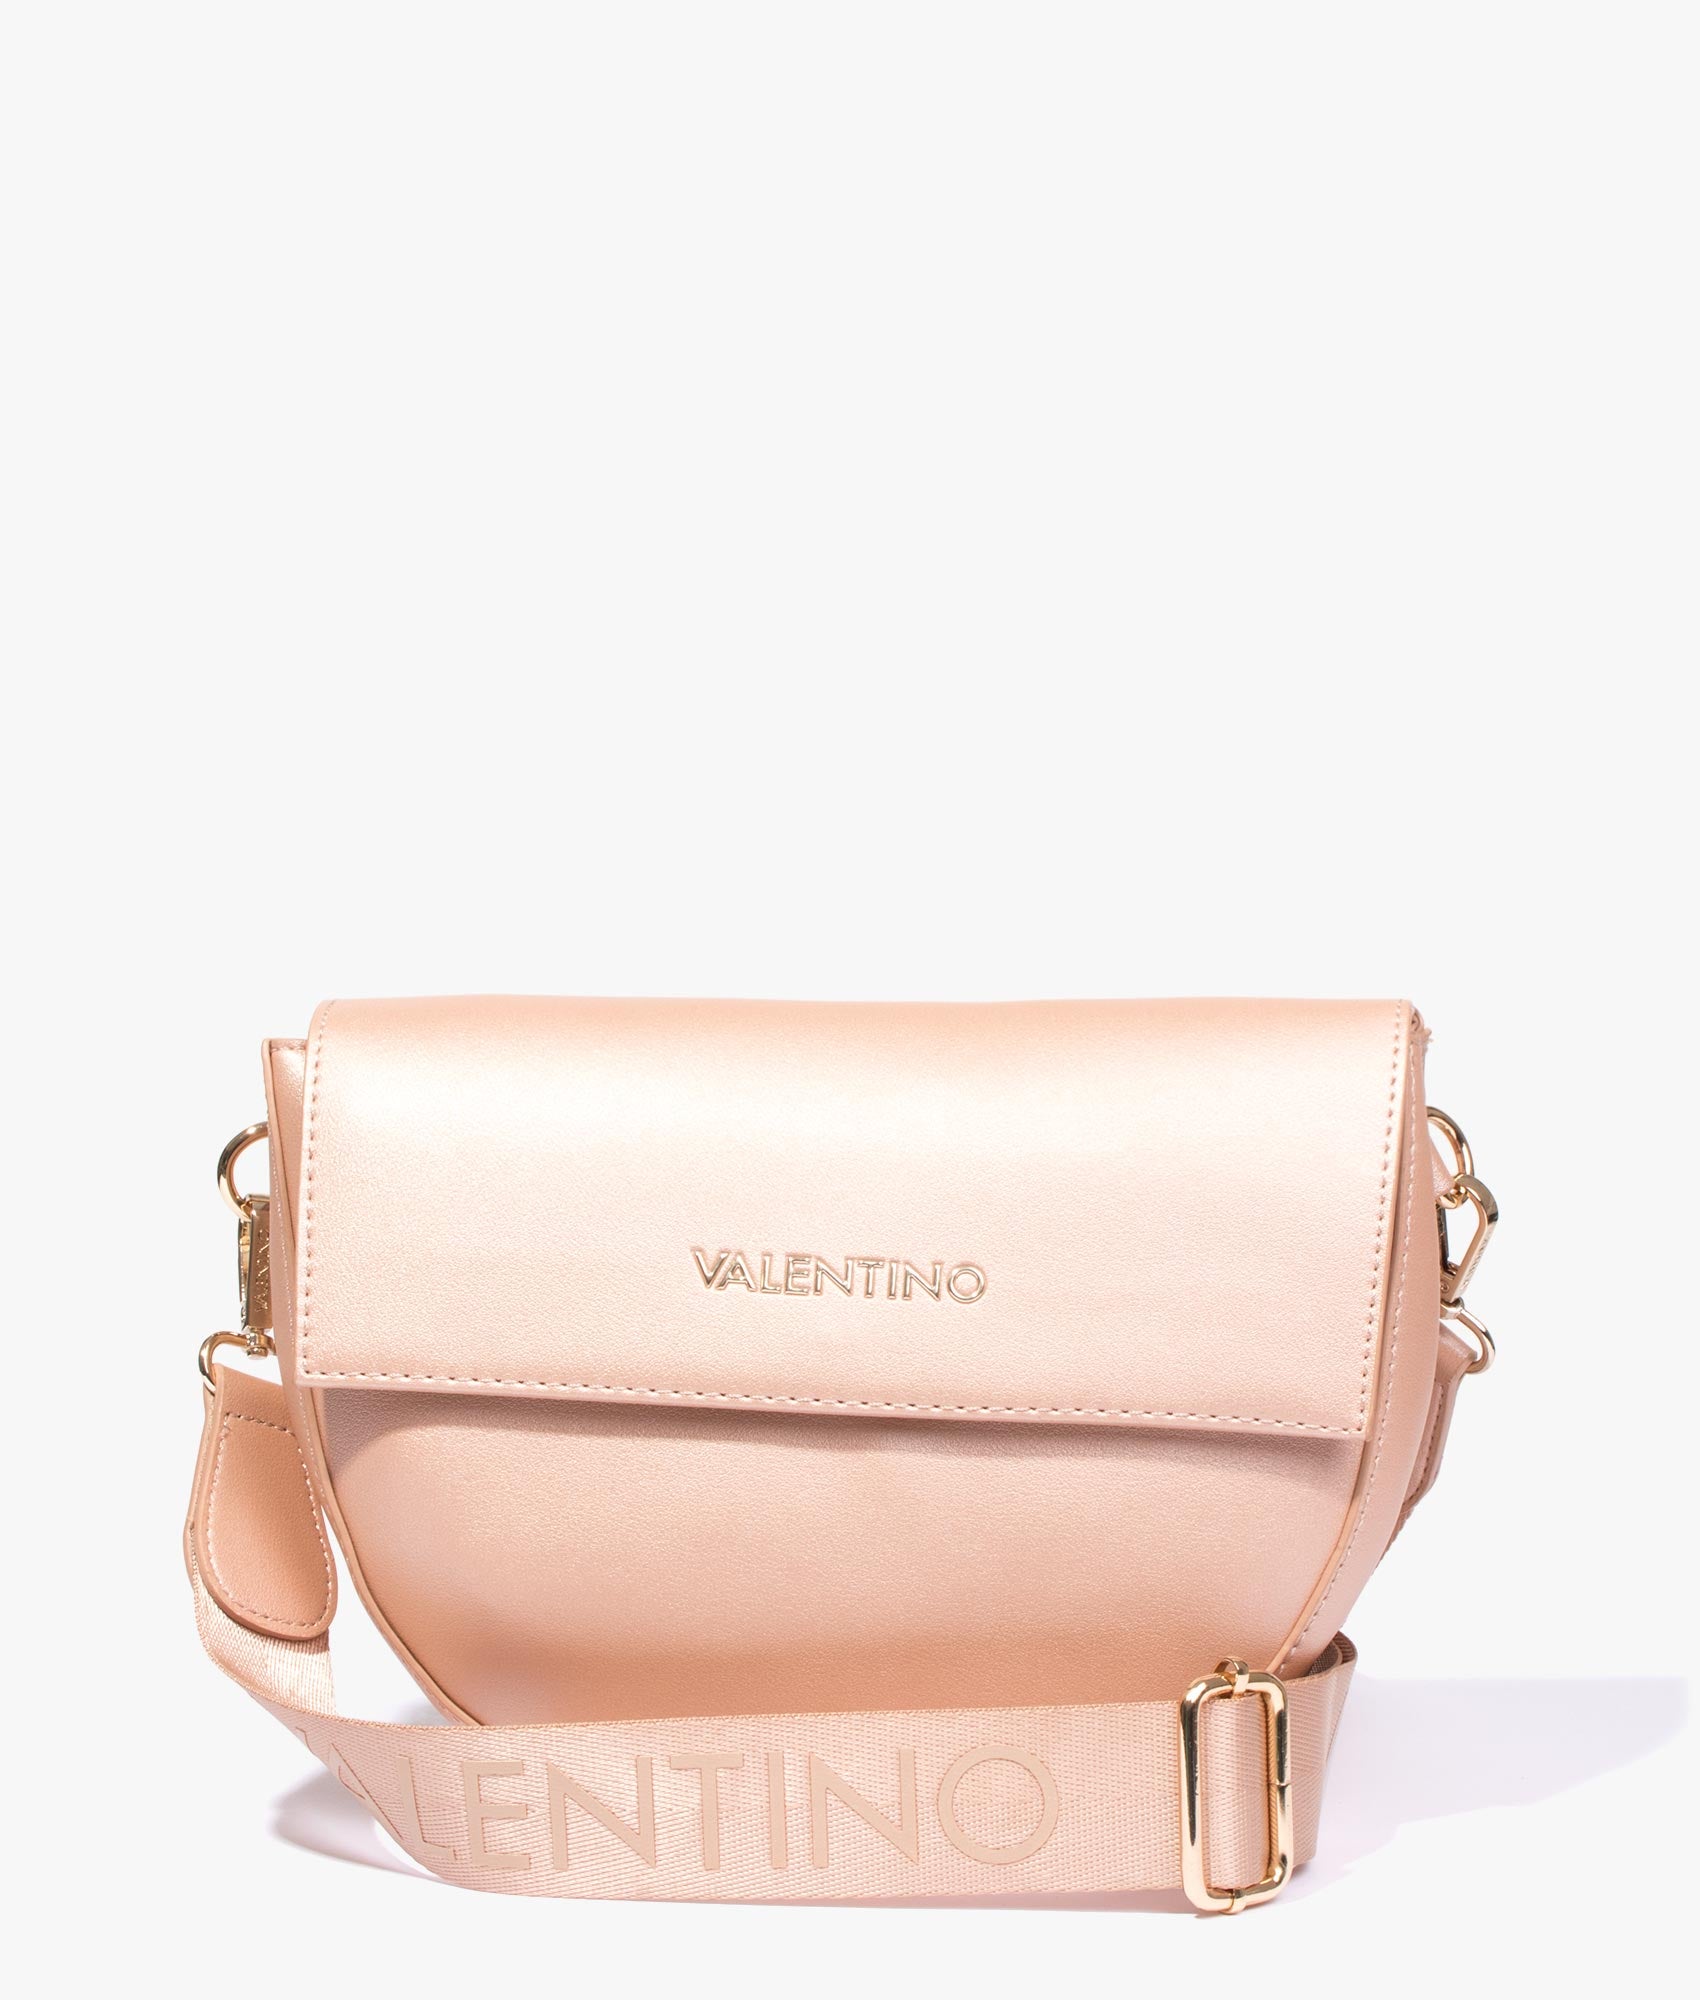 Valentino Bags DIVINA - Handbag - ghiaccio/white - Zalando.de